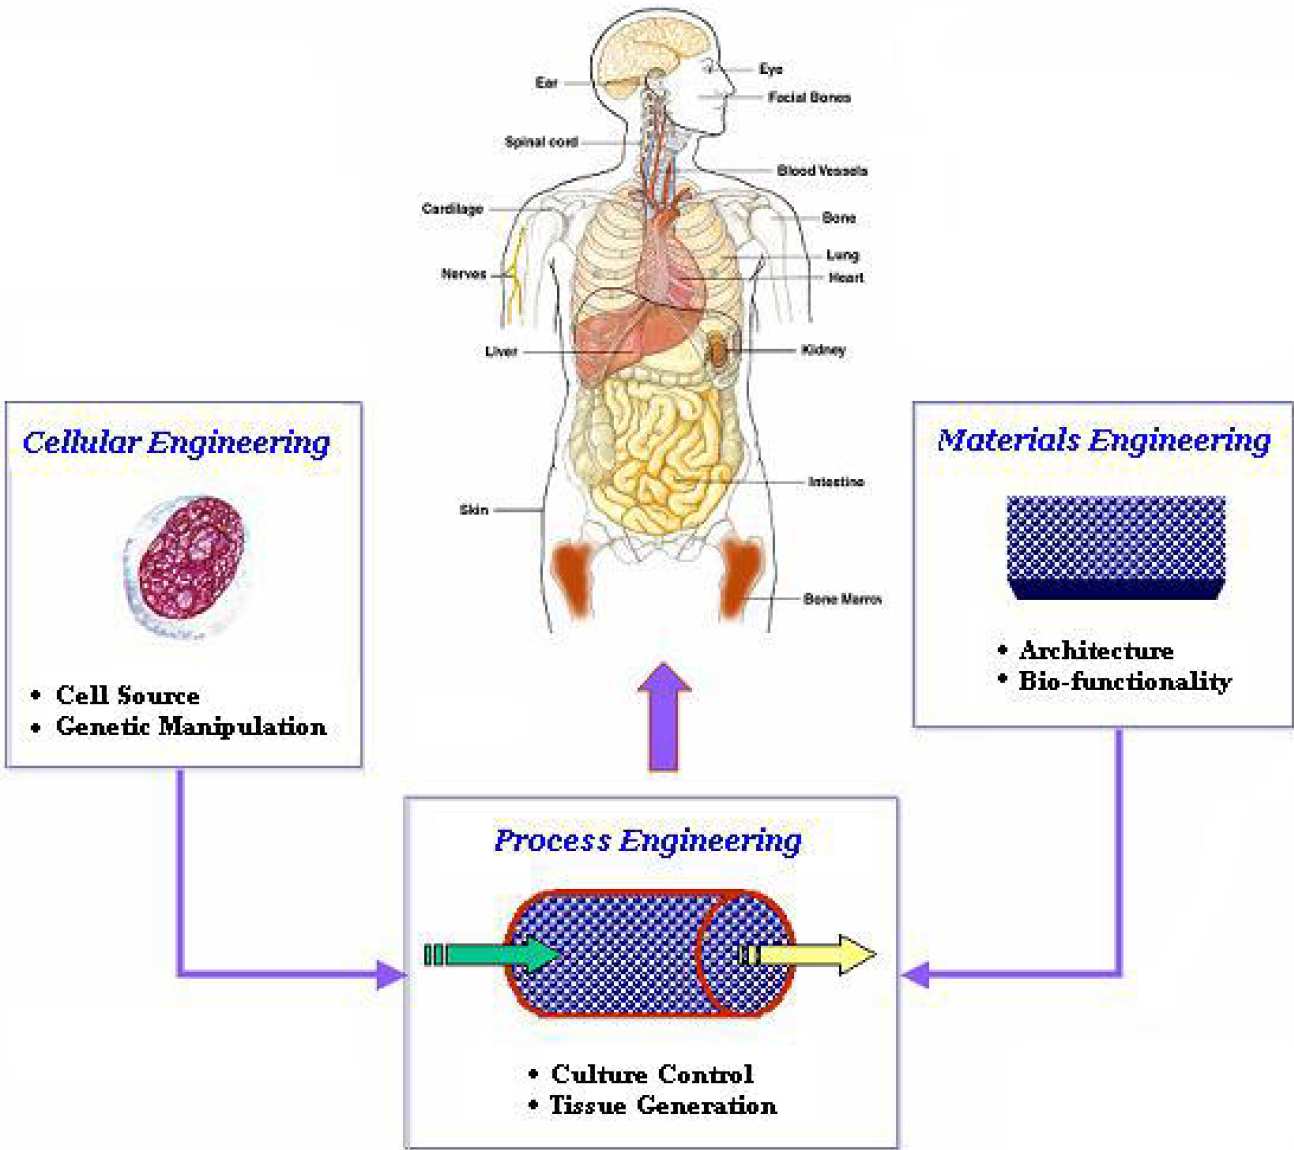 Flow diagram of tissue engineering